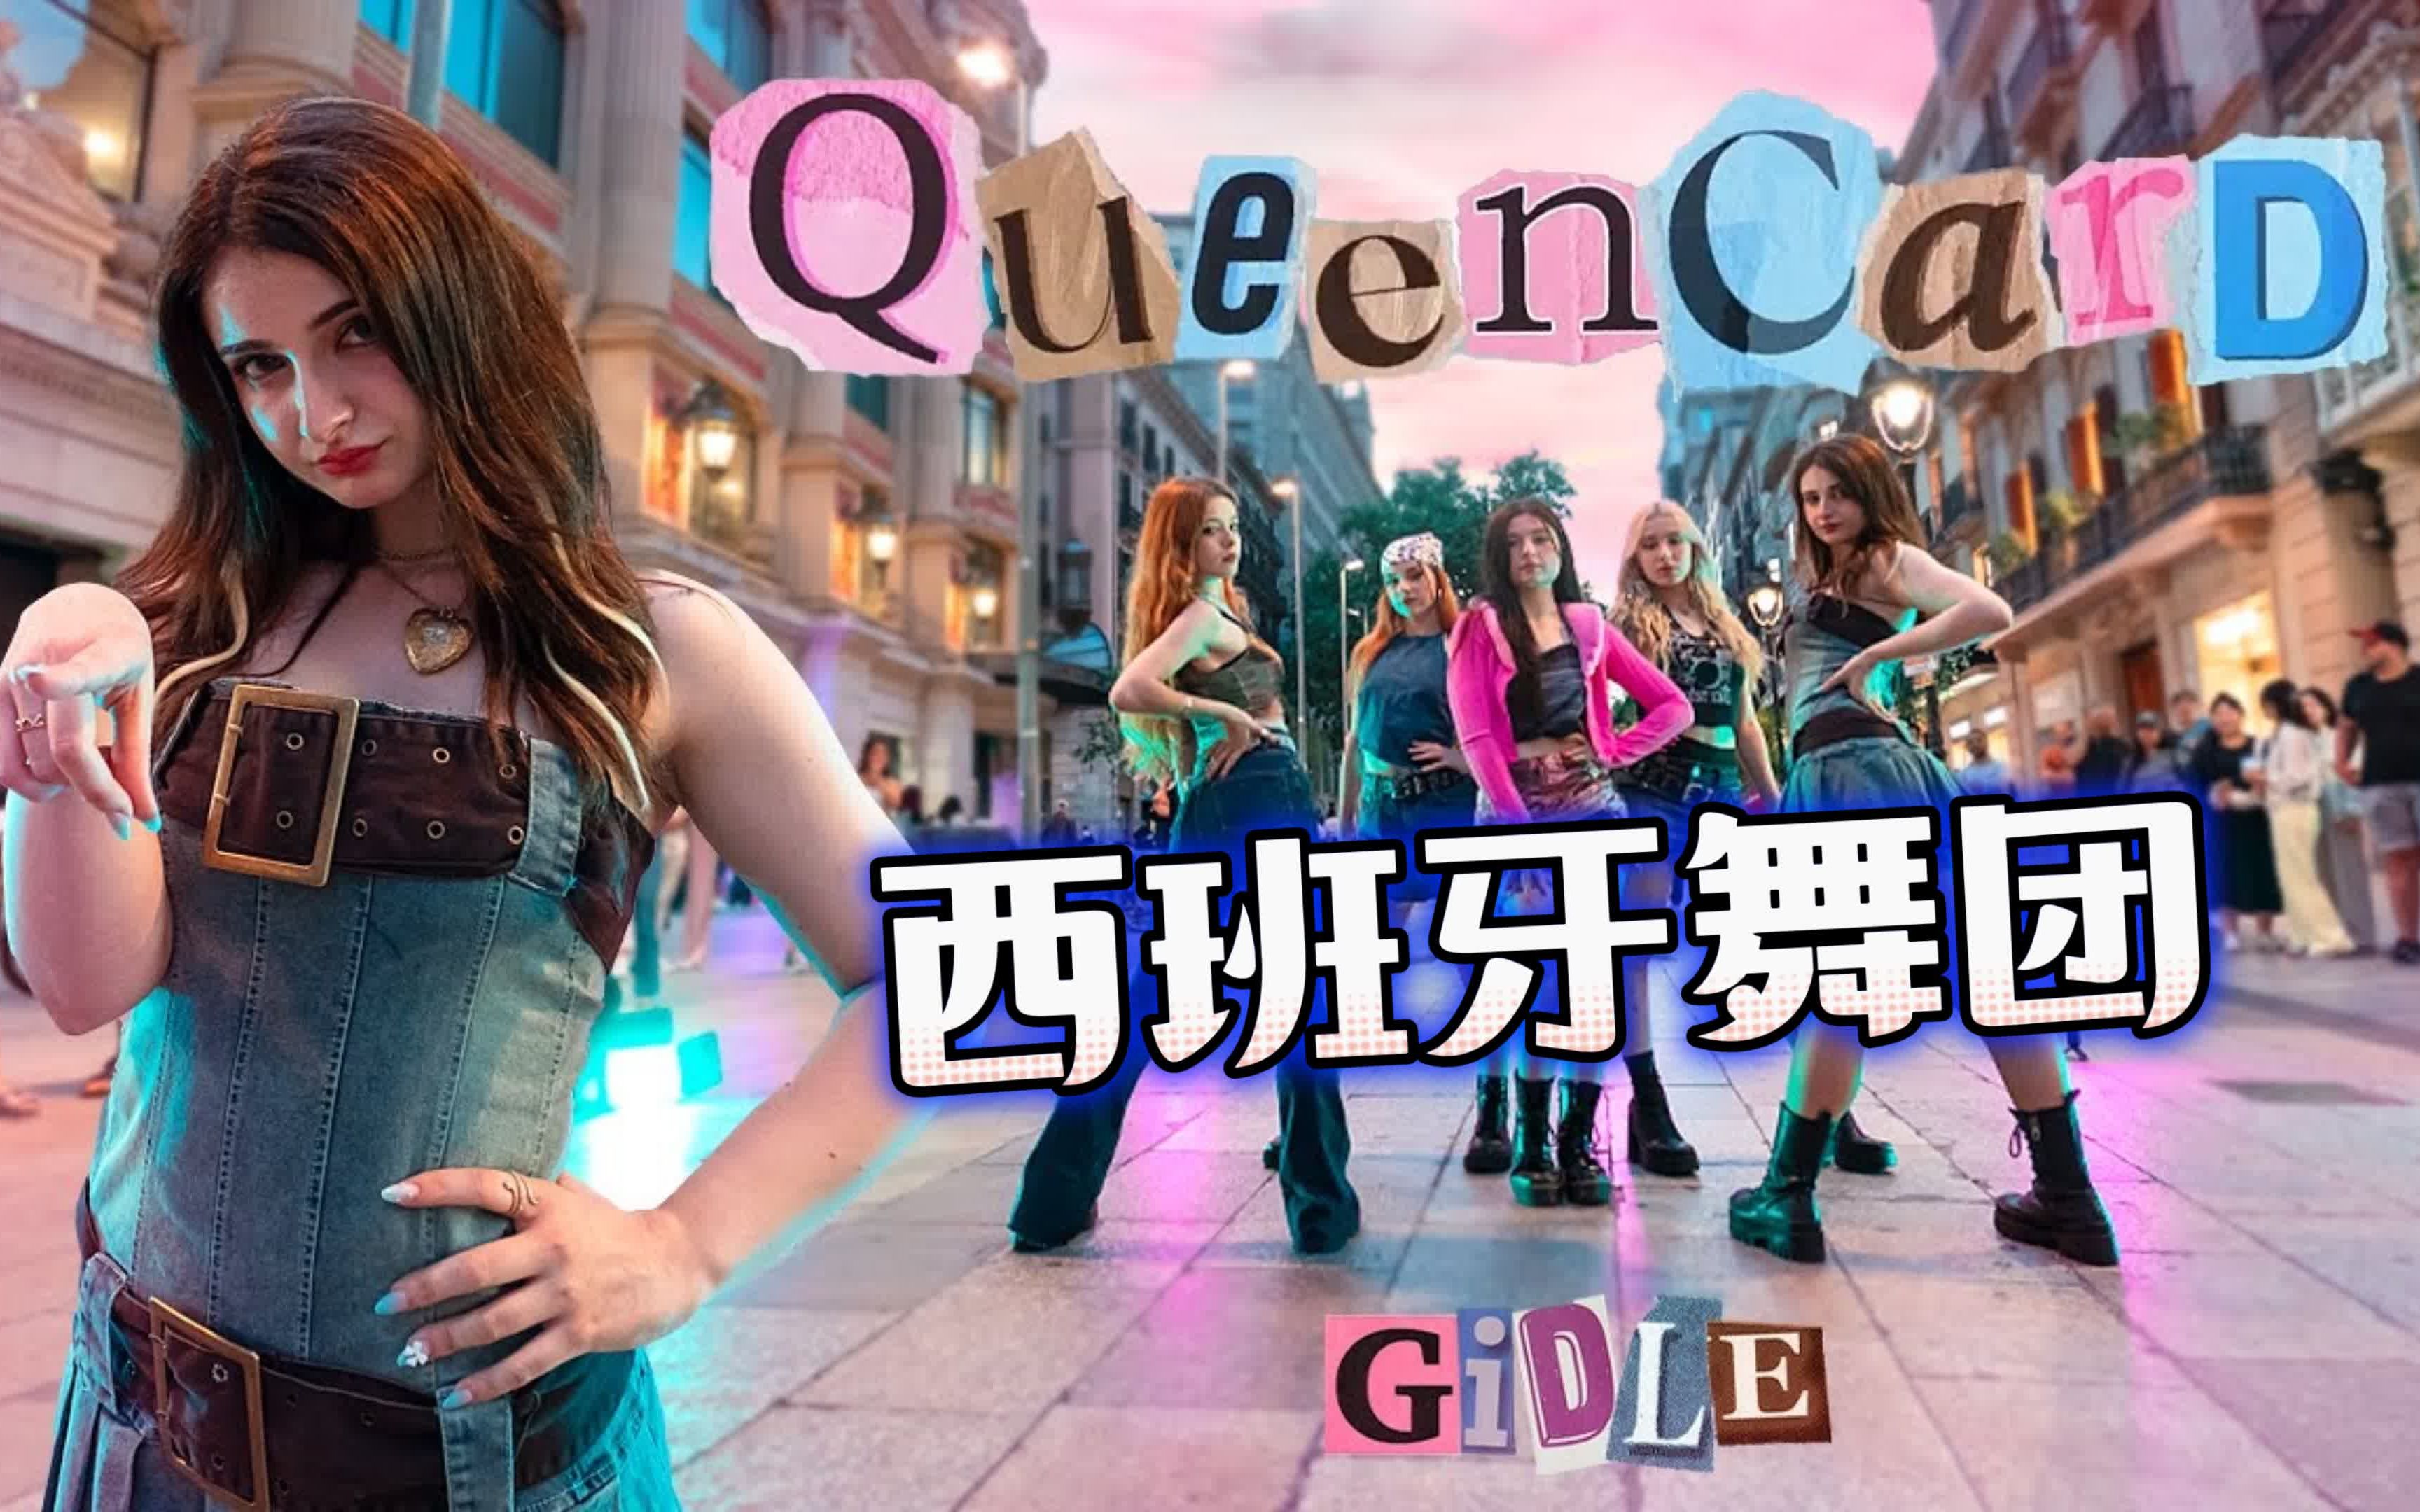 西班牙舞团cover翻跳gidle娃Queencard(质量很高)